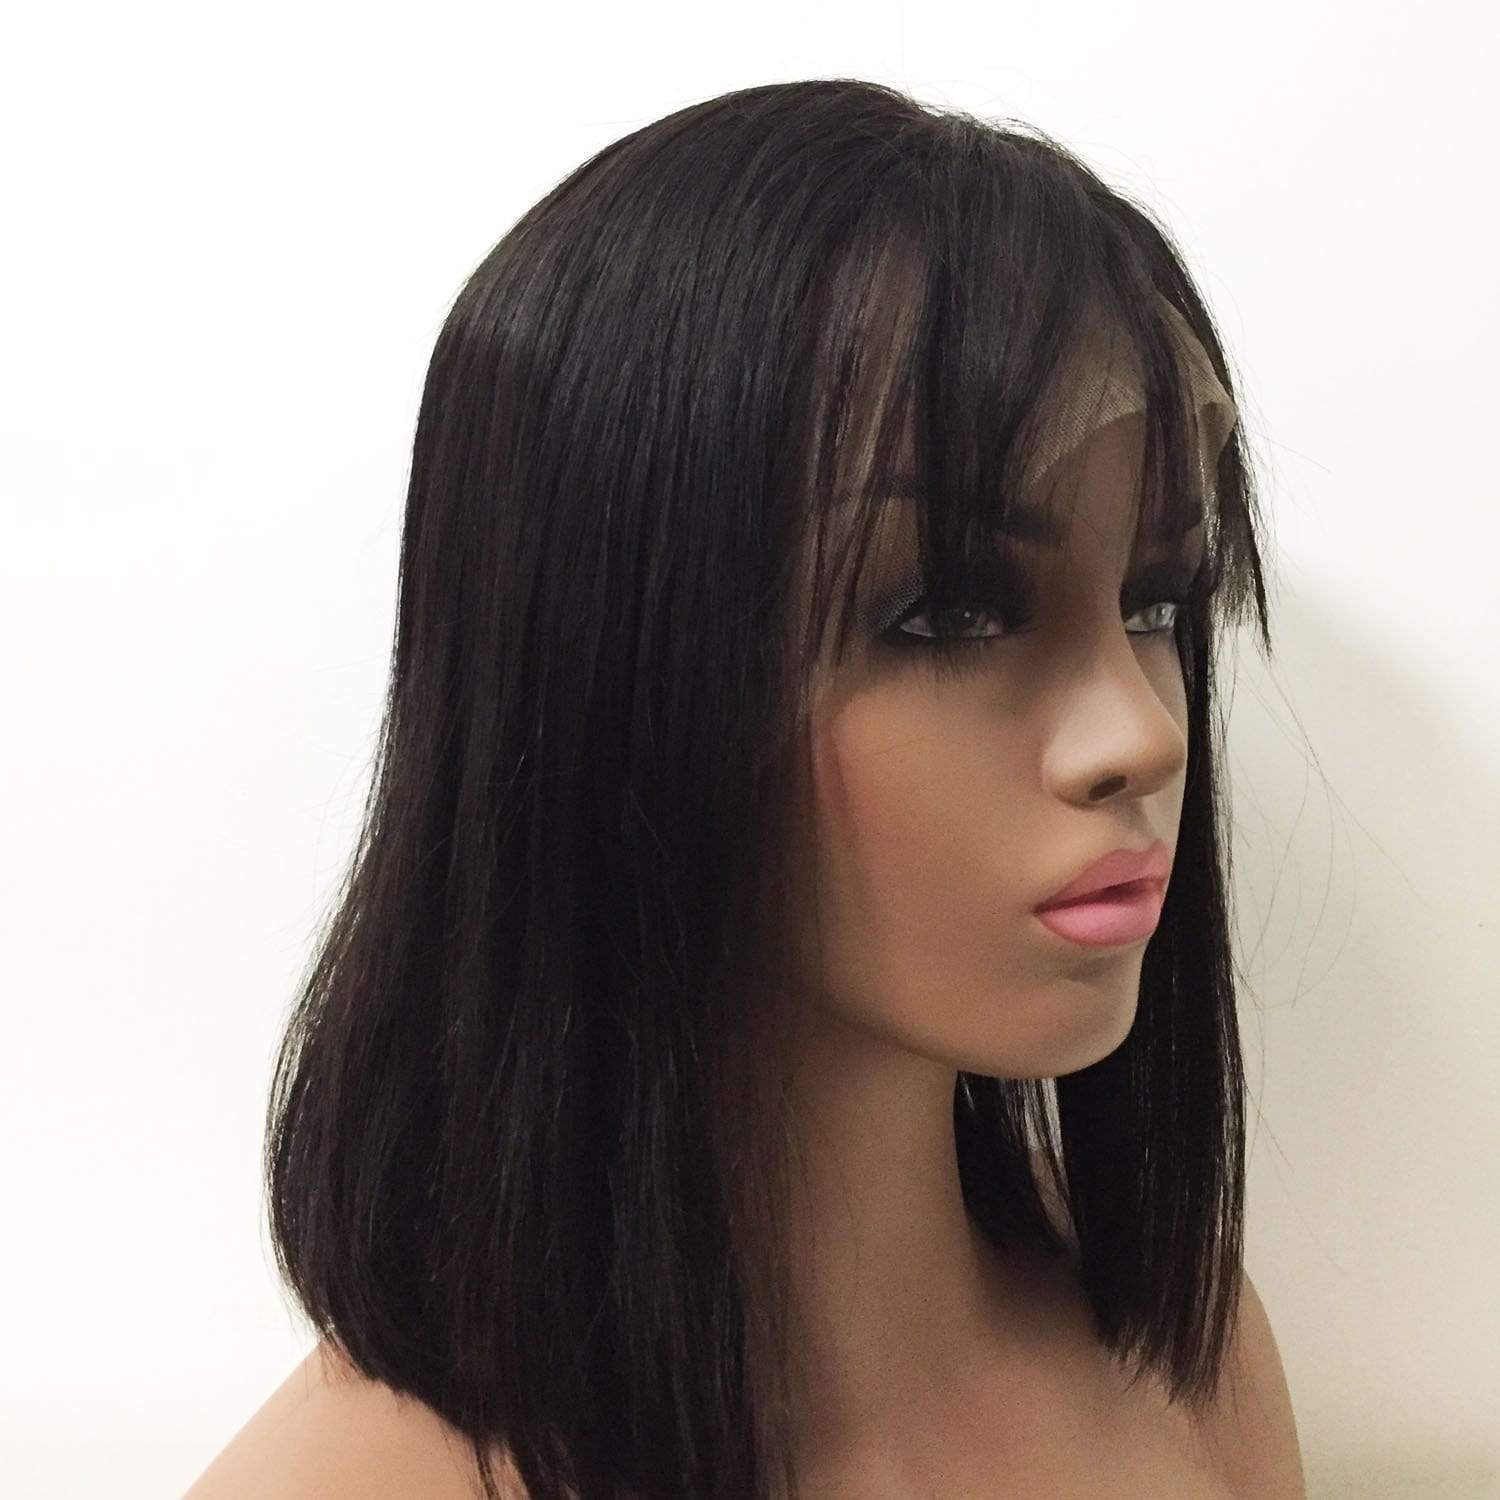 nevermindyrhead Women Black Human Hair Lace Front Medium Length Straight Fringe Bangs Wig